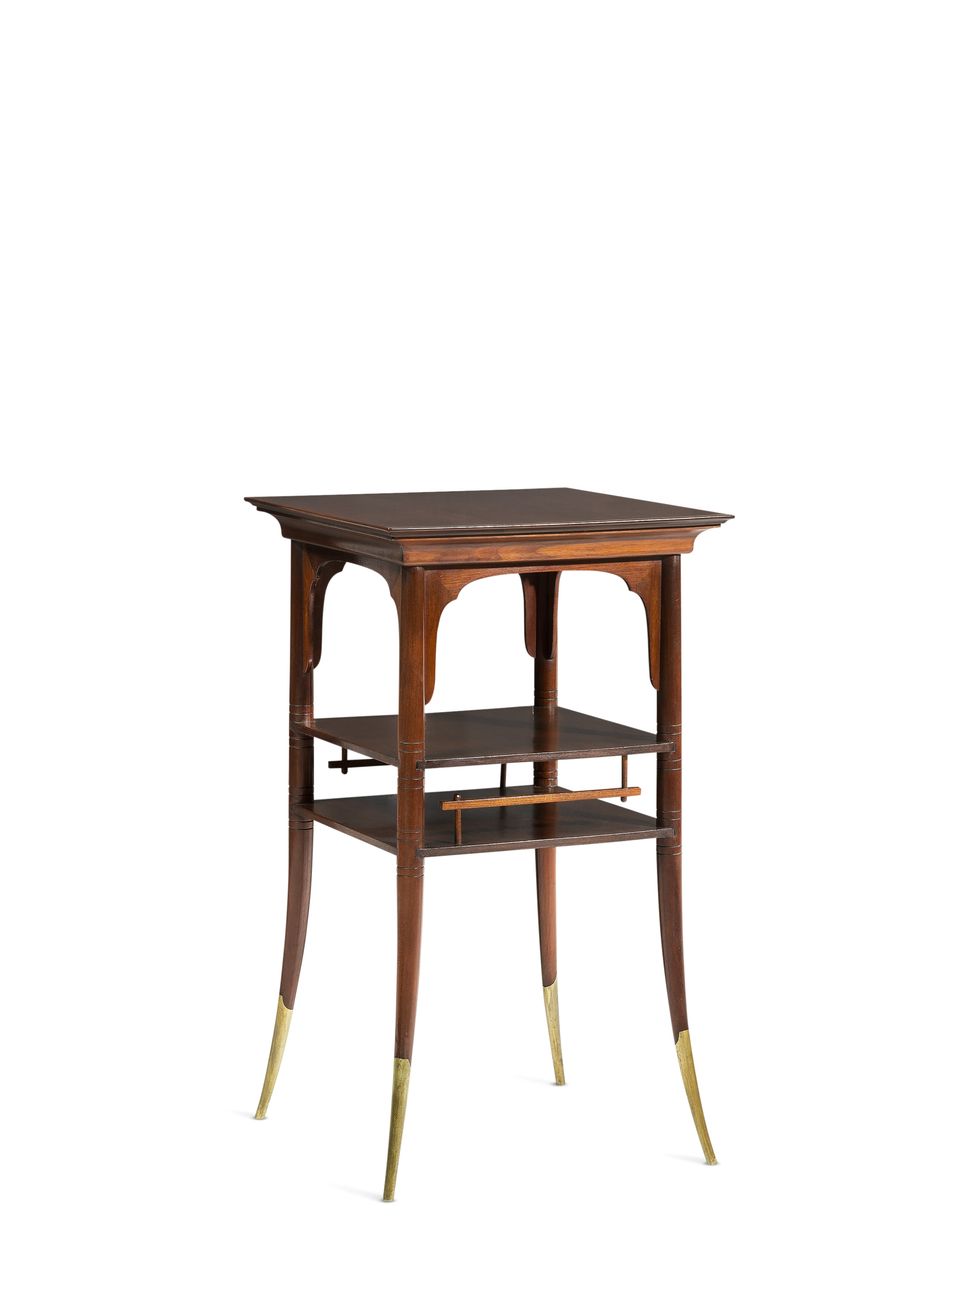 edward william godwin table 1876